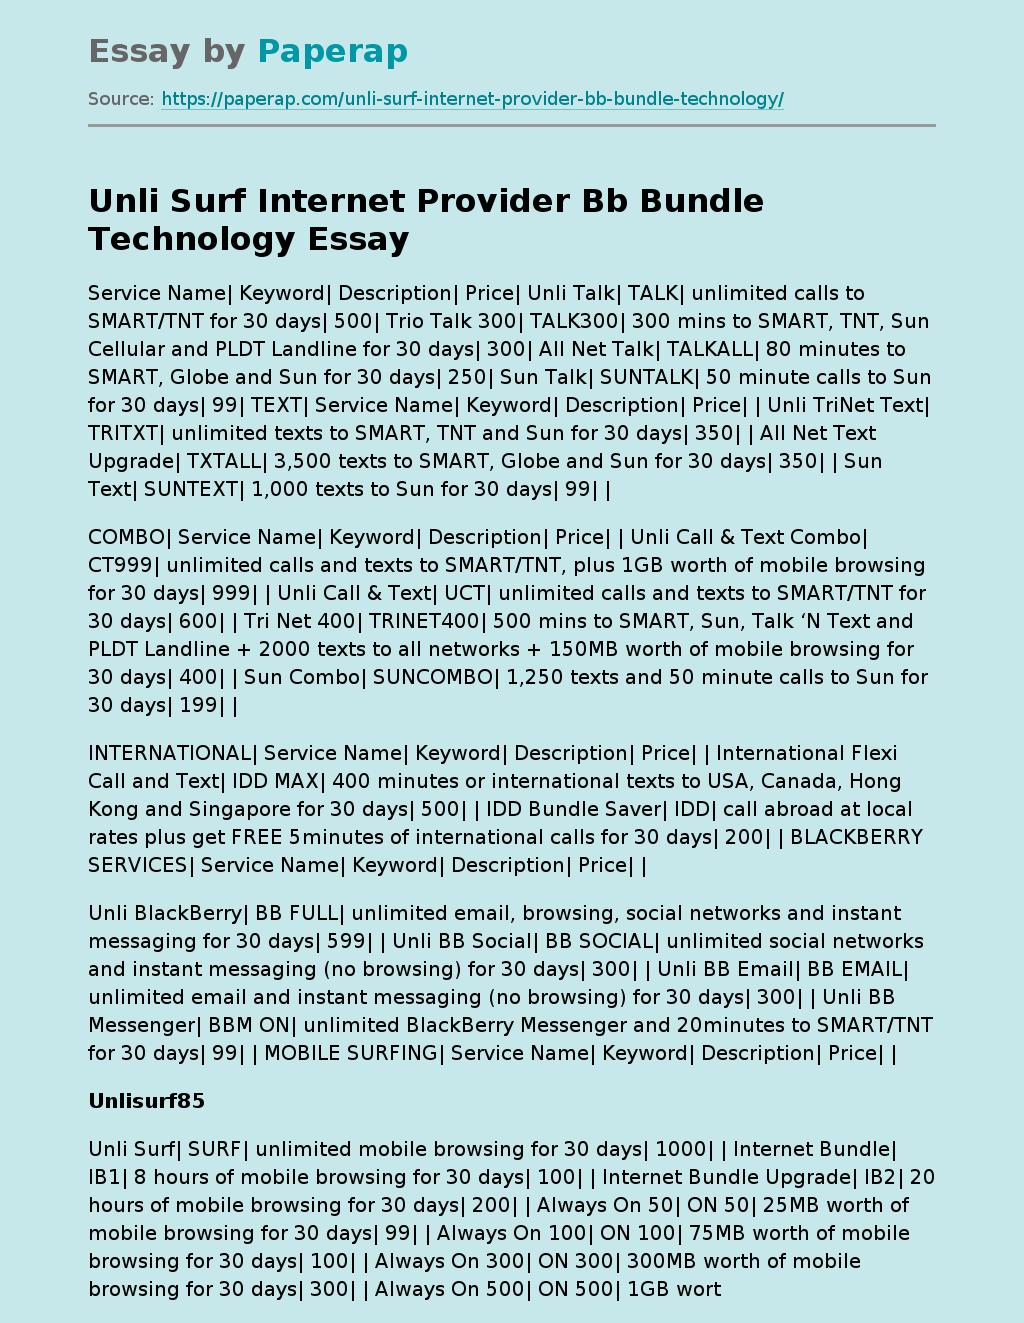 Unli Surf Internet Provider Bb Bundle Technology